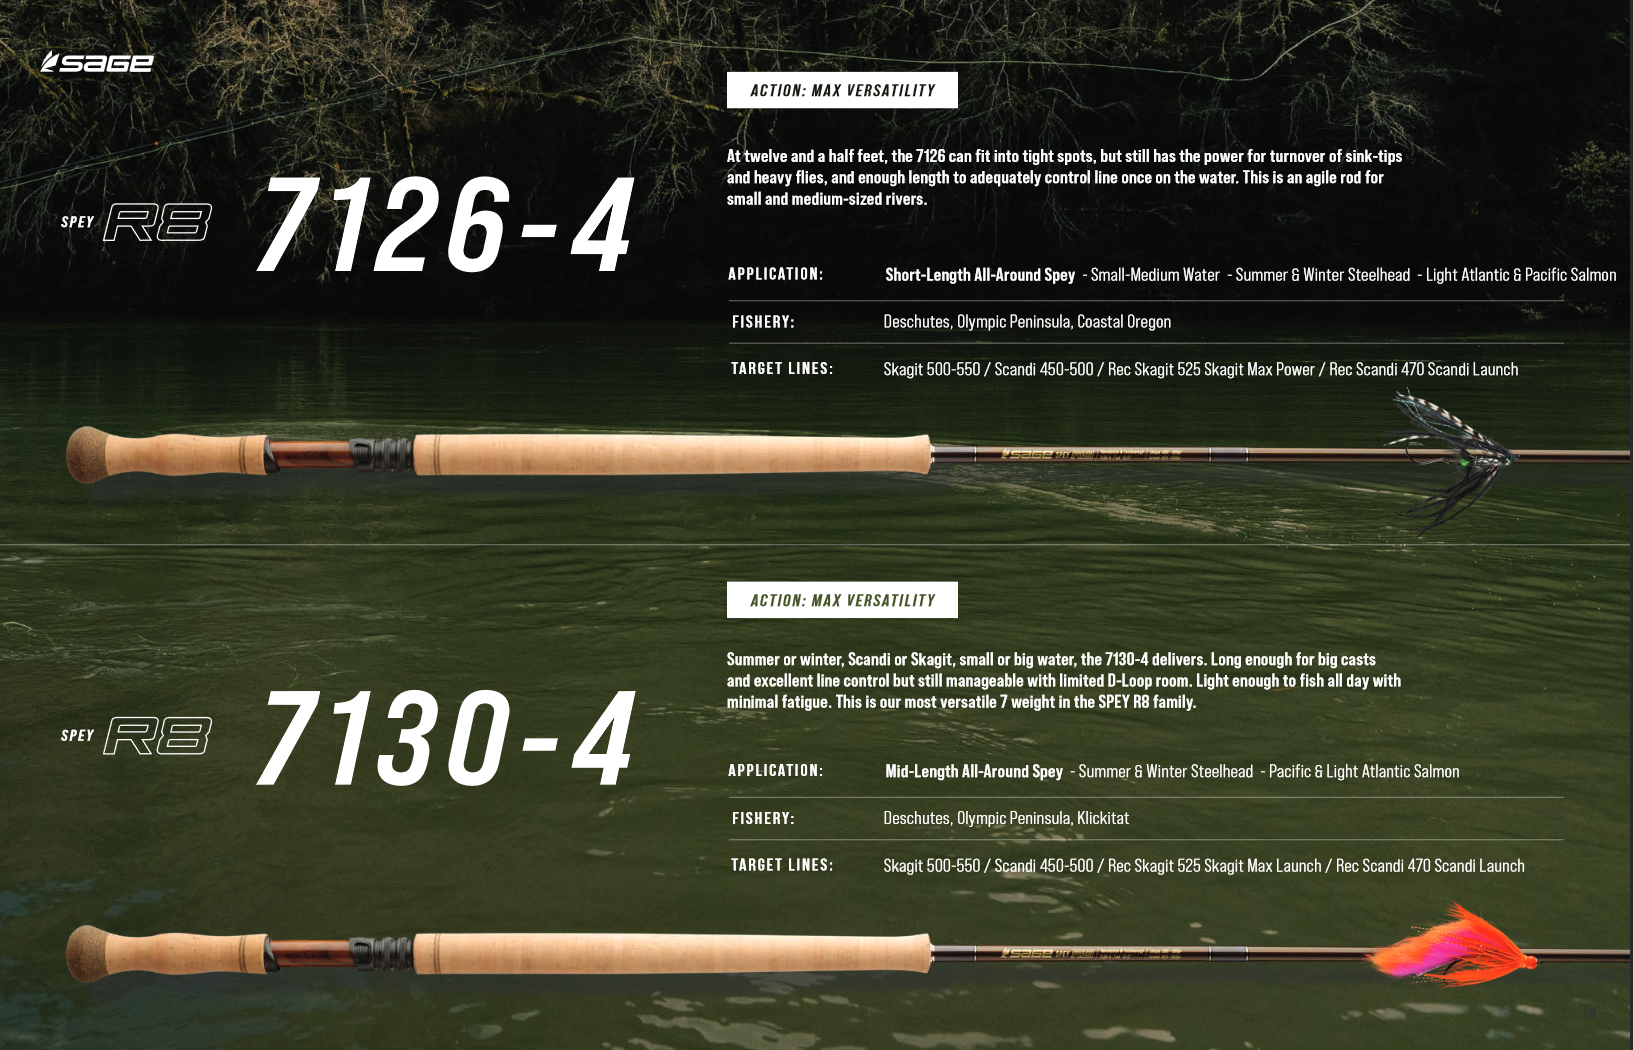 Sage SPEY R8 7126-4 7wt 12'6" Rods for Maximum Versatility - NEW!